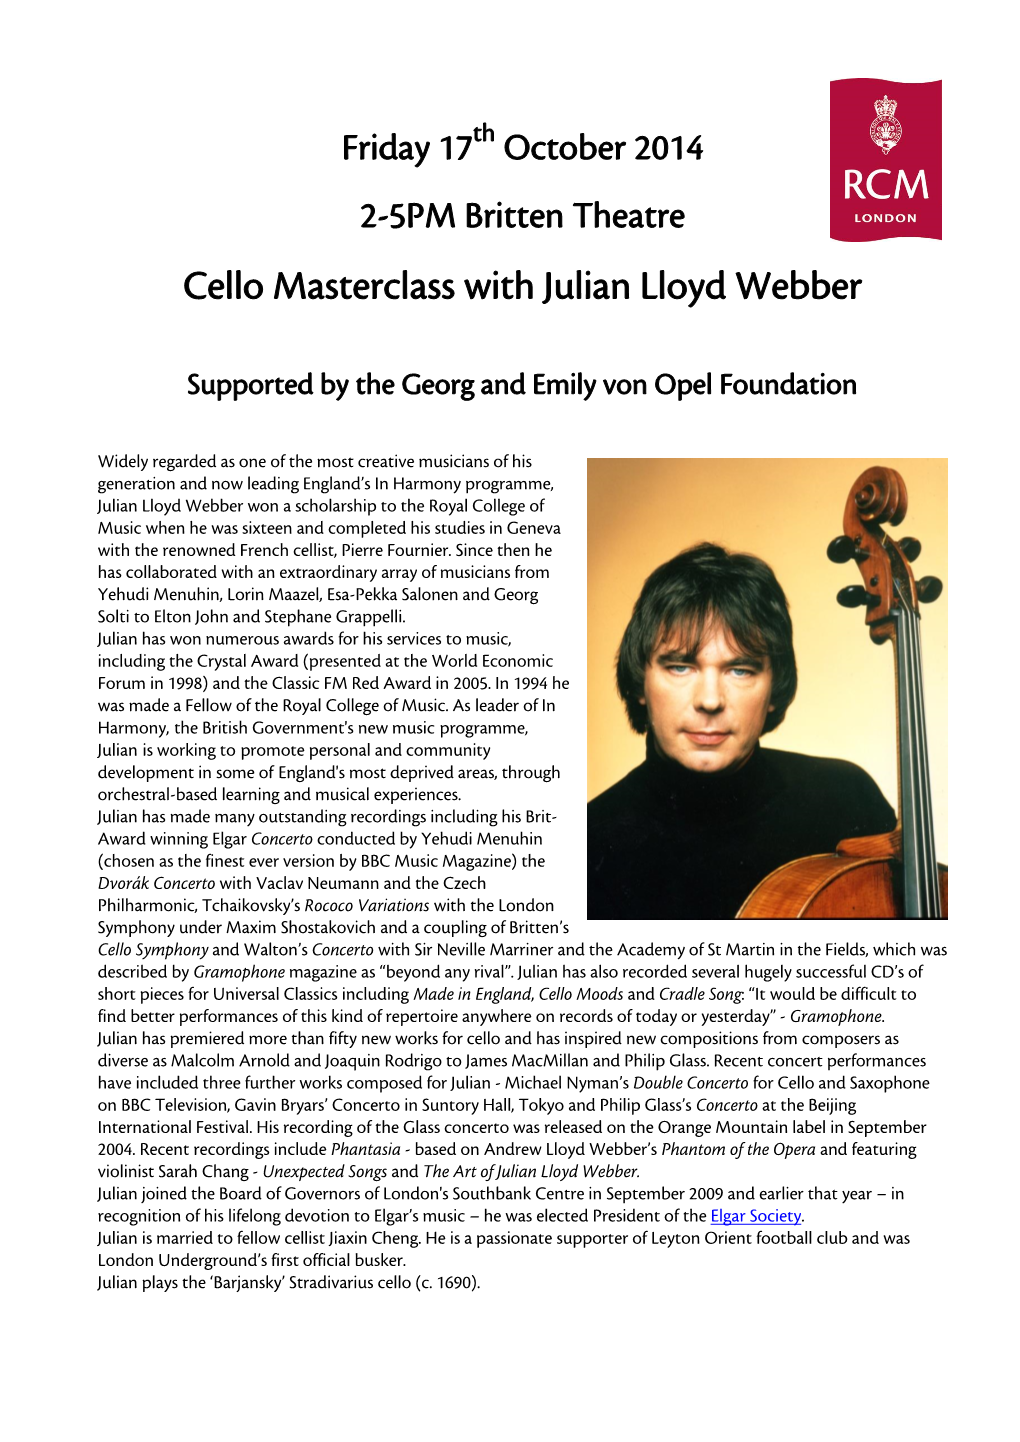 Cello Masterclass with Julian Lloyd Webber